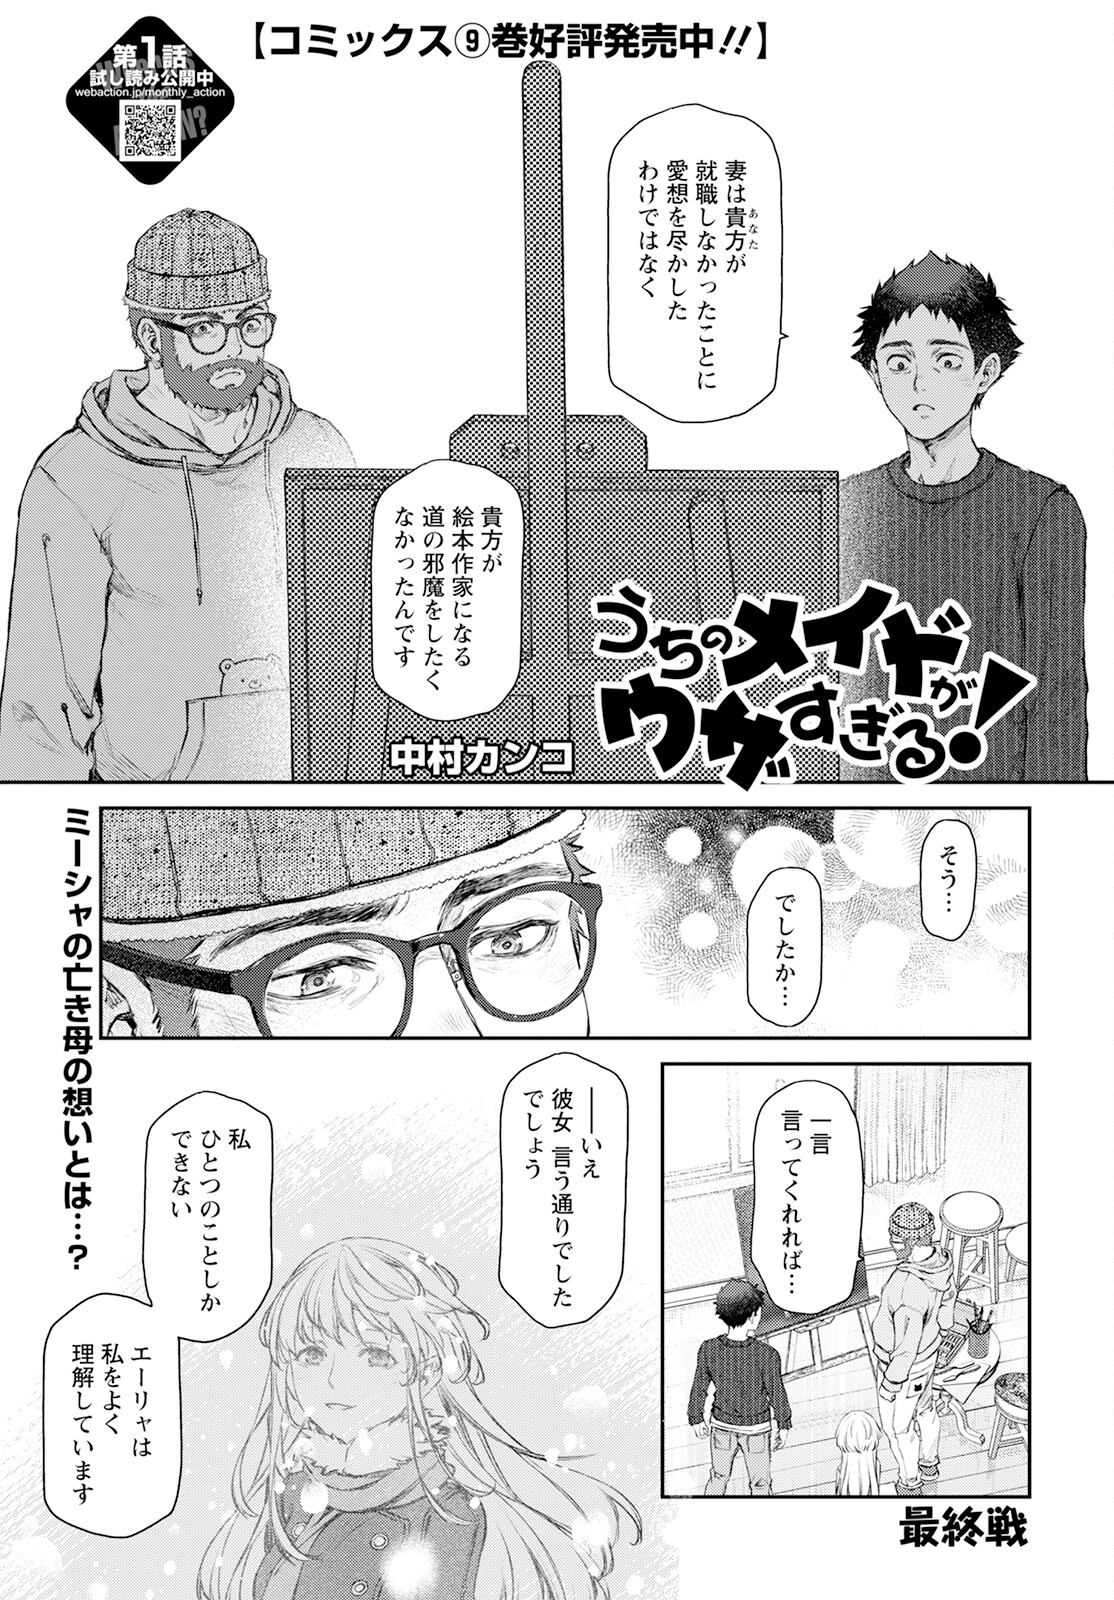 Uchi no Maid ga Uzasugiru! - Chapter 58 - Page 1